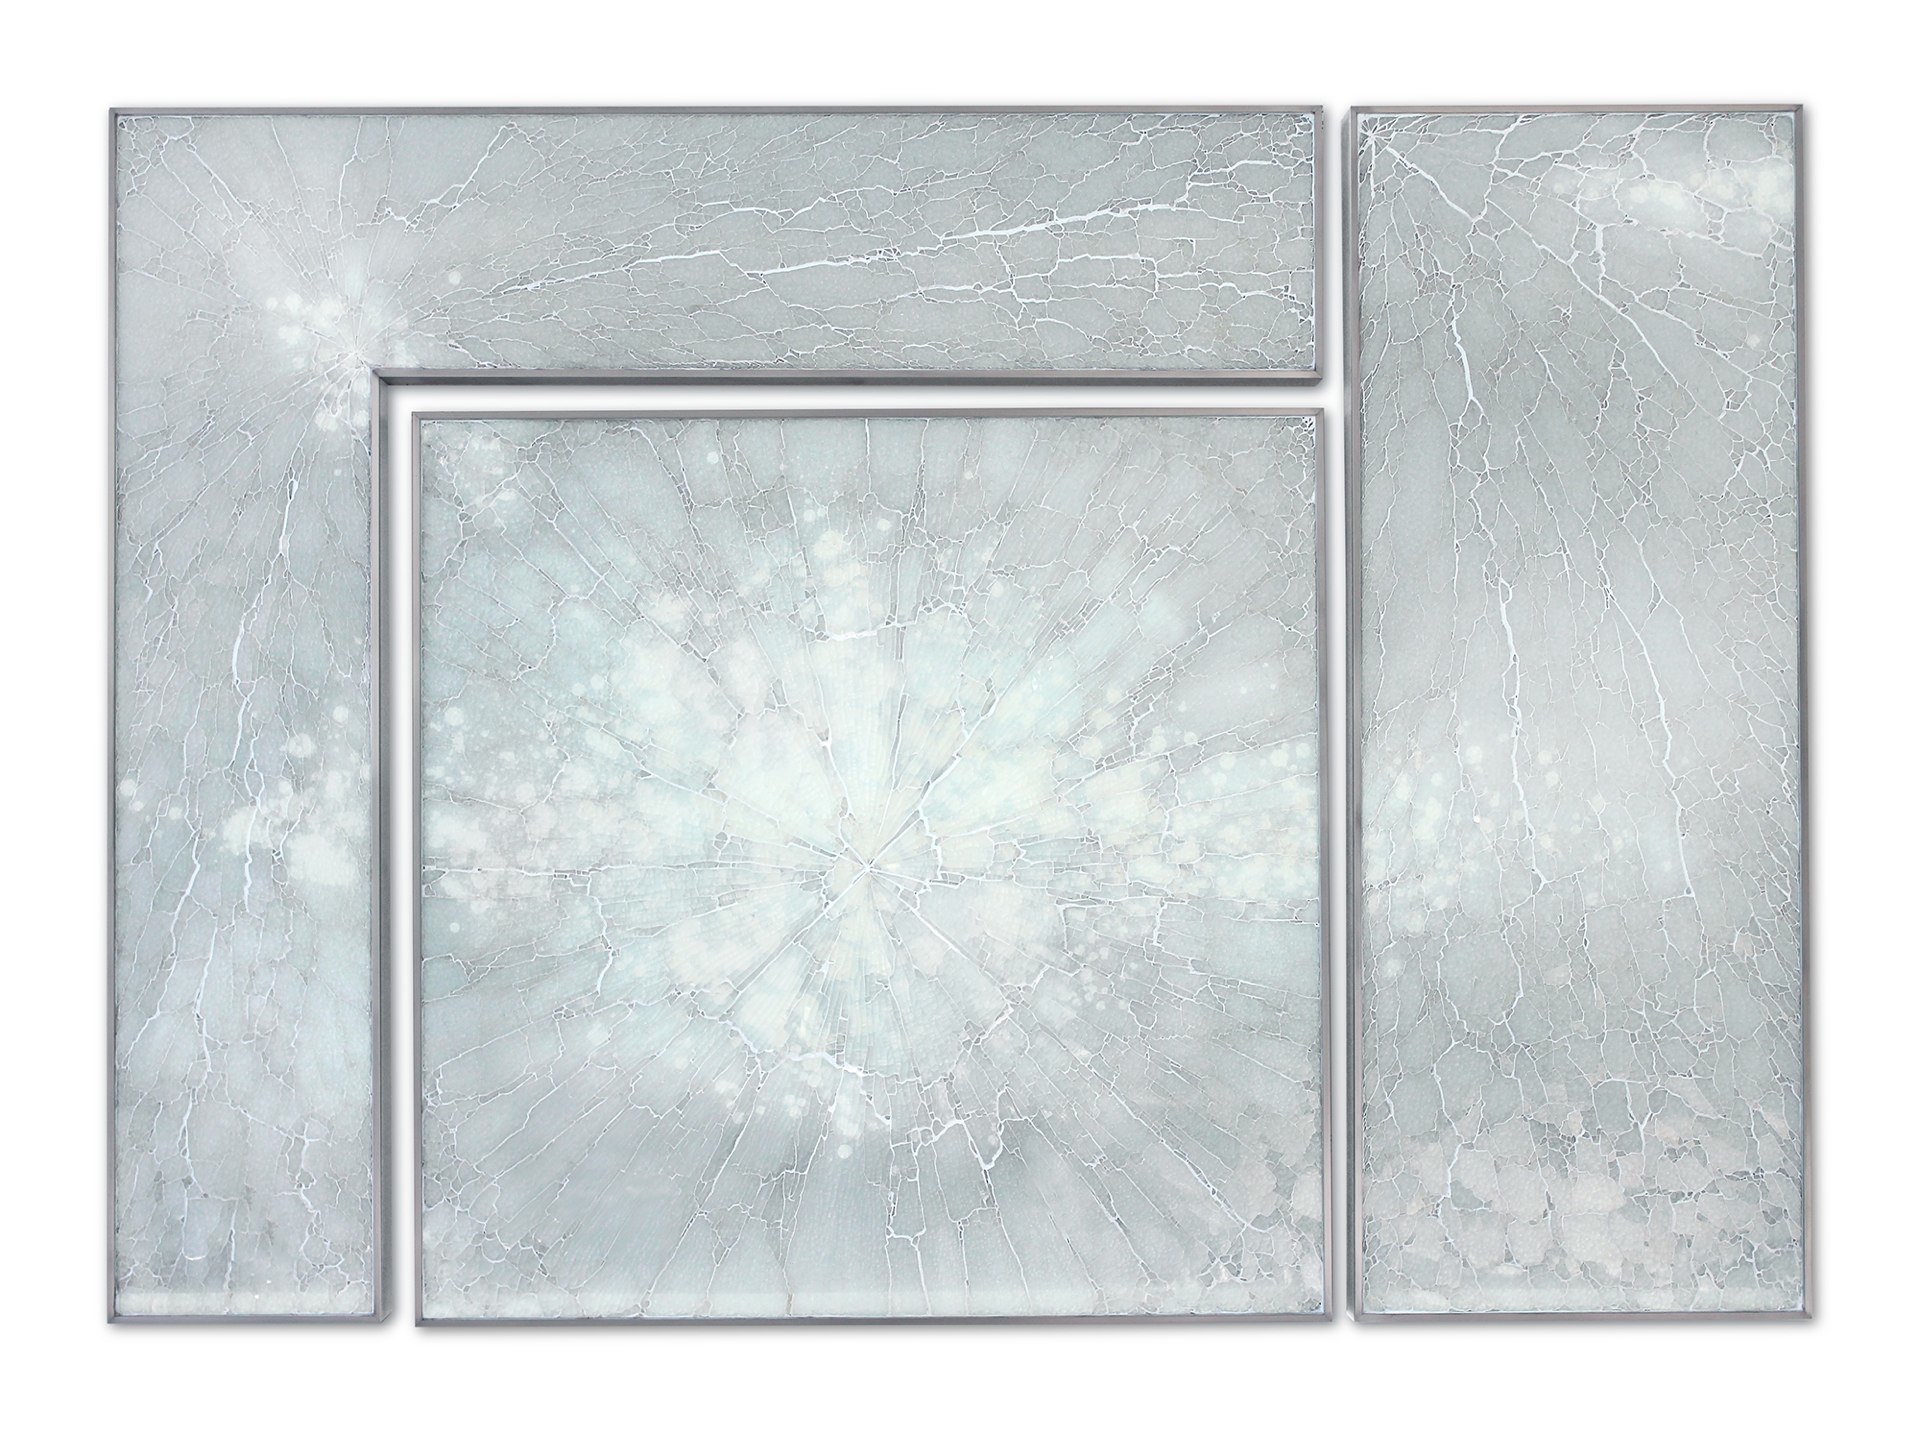 Cassandria Blackmore, "Asimi Lefko II," 2015, reverse painted glass, 40 x 56 inches